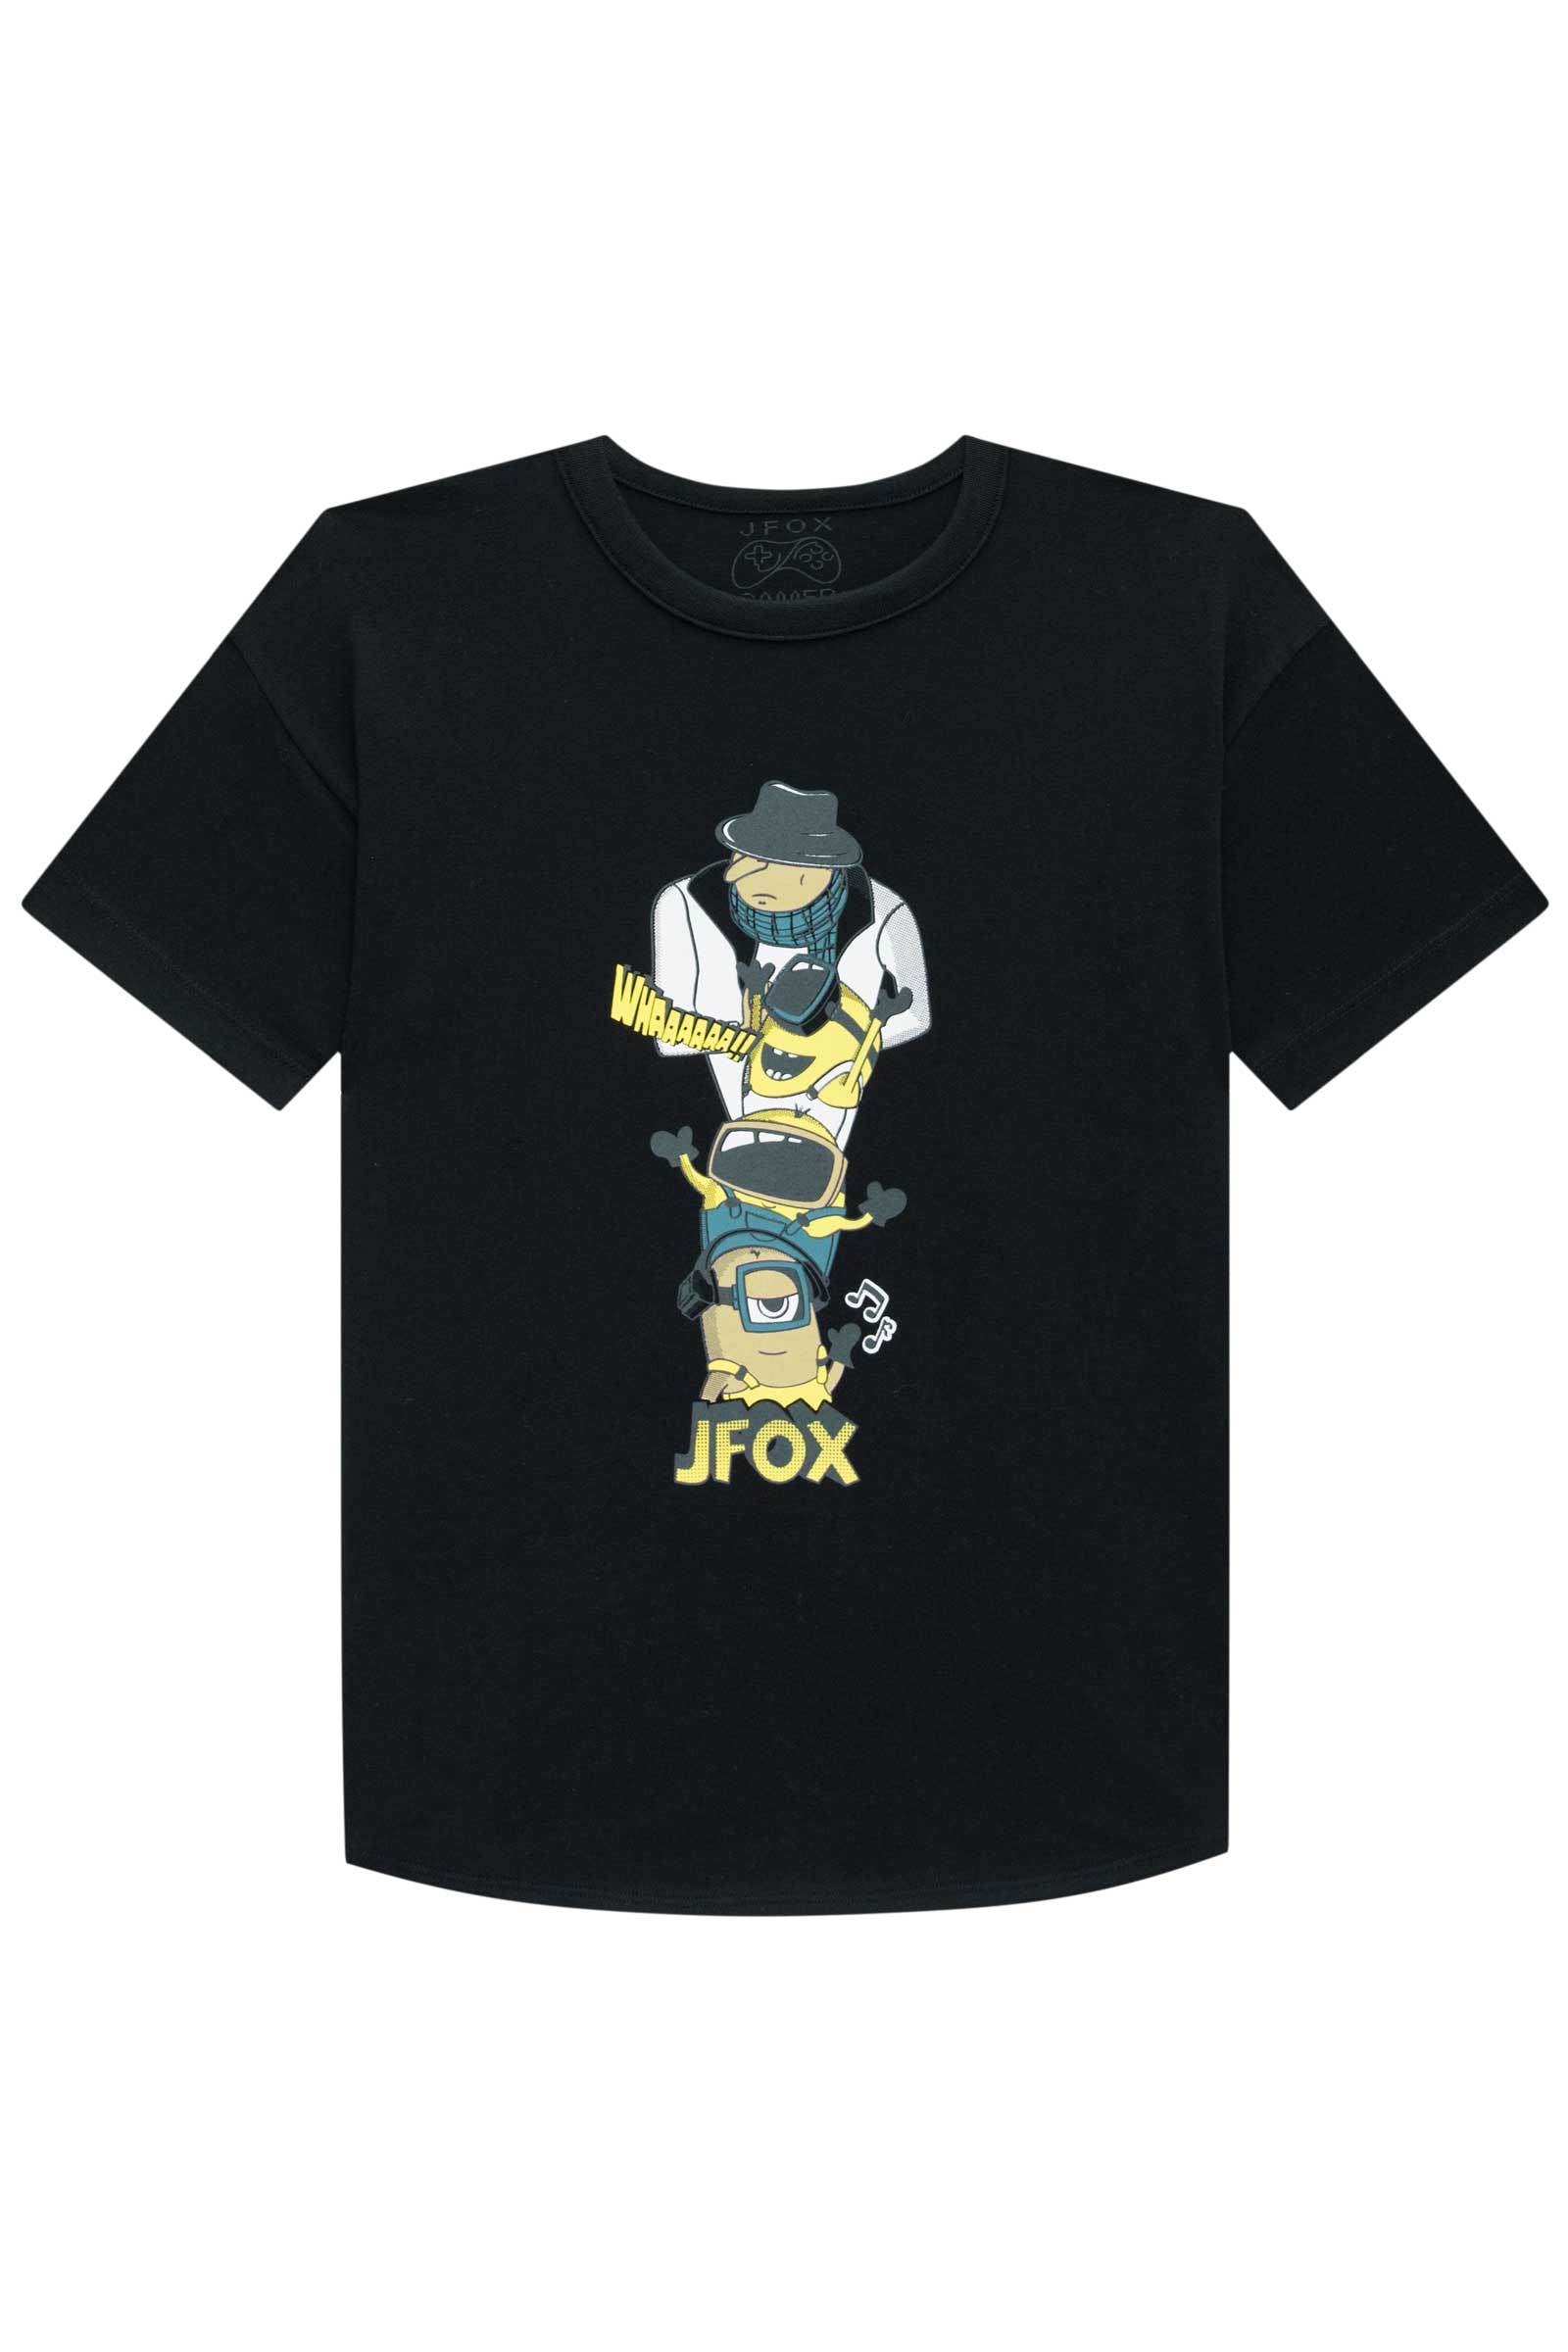 Camiseta em Meia Malha 74984 Johnny Fox